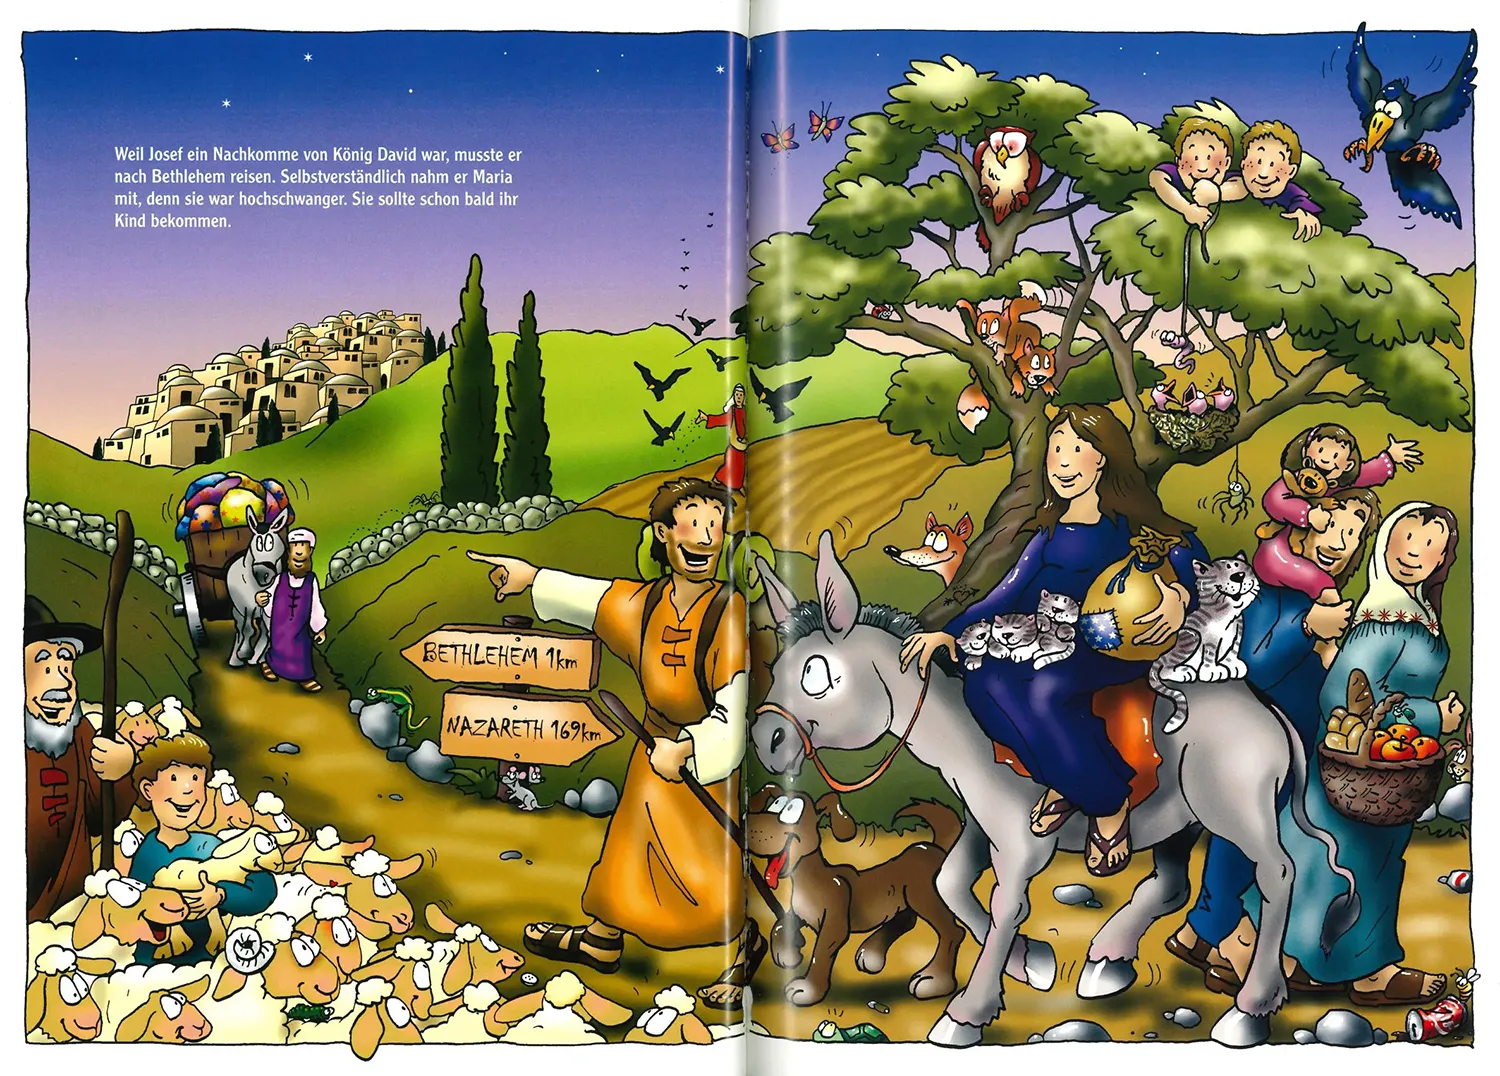 Bilderbuch - Stern über Bethlehem